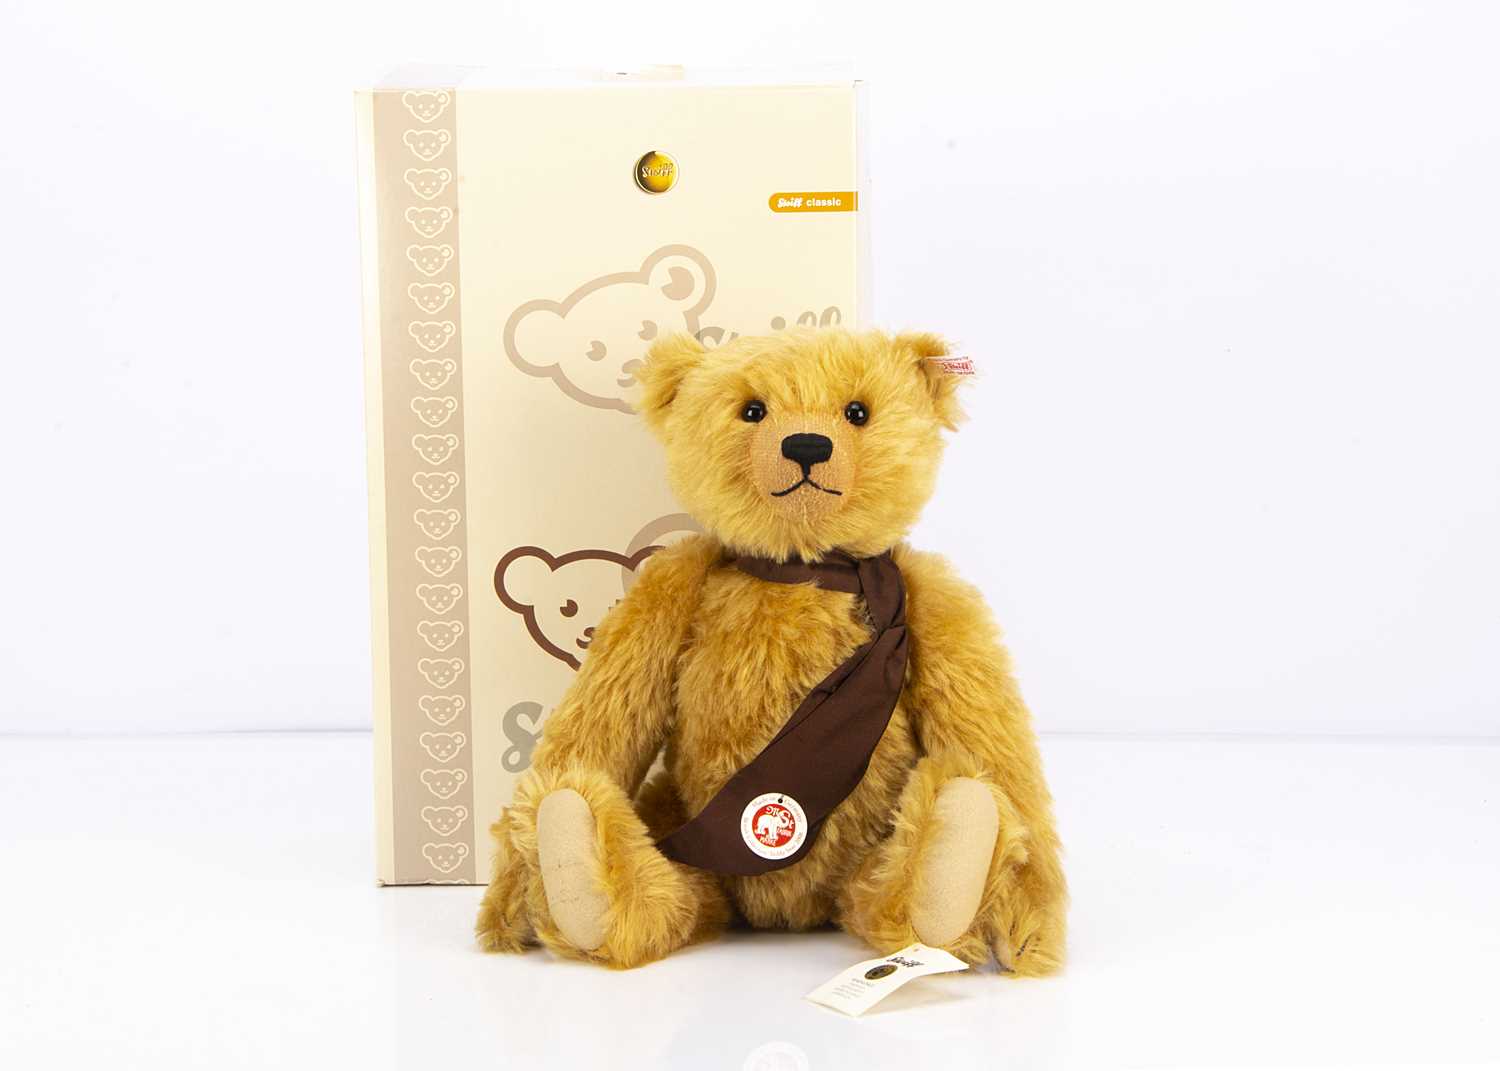 A Steiff limited edition British Collectors 2008 teddy bear,